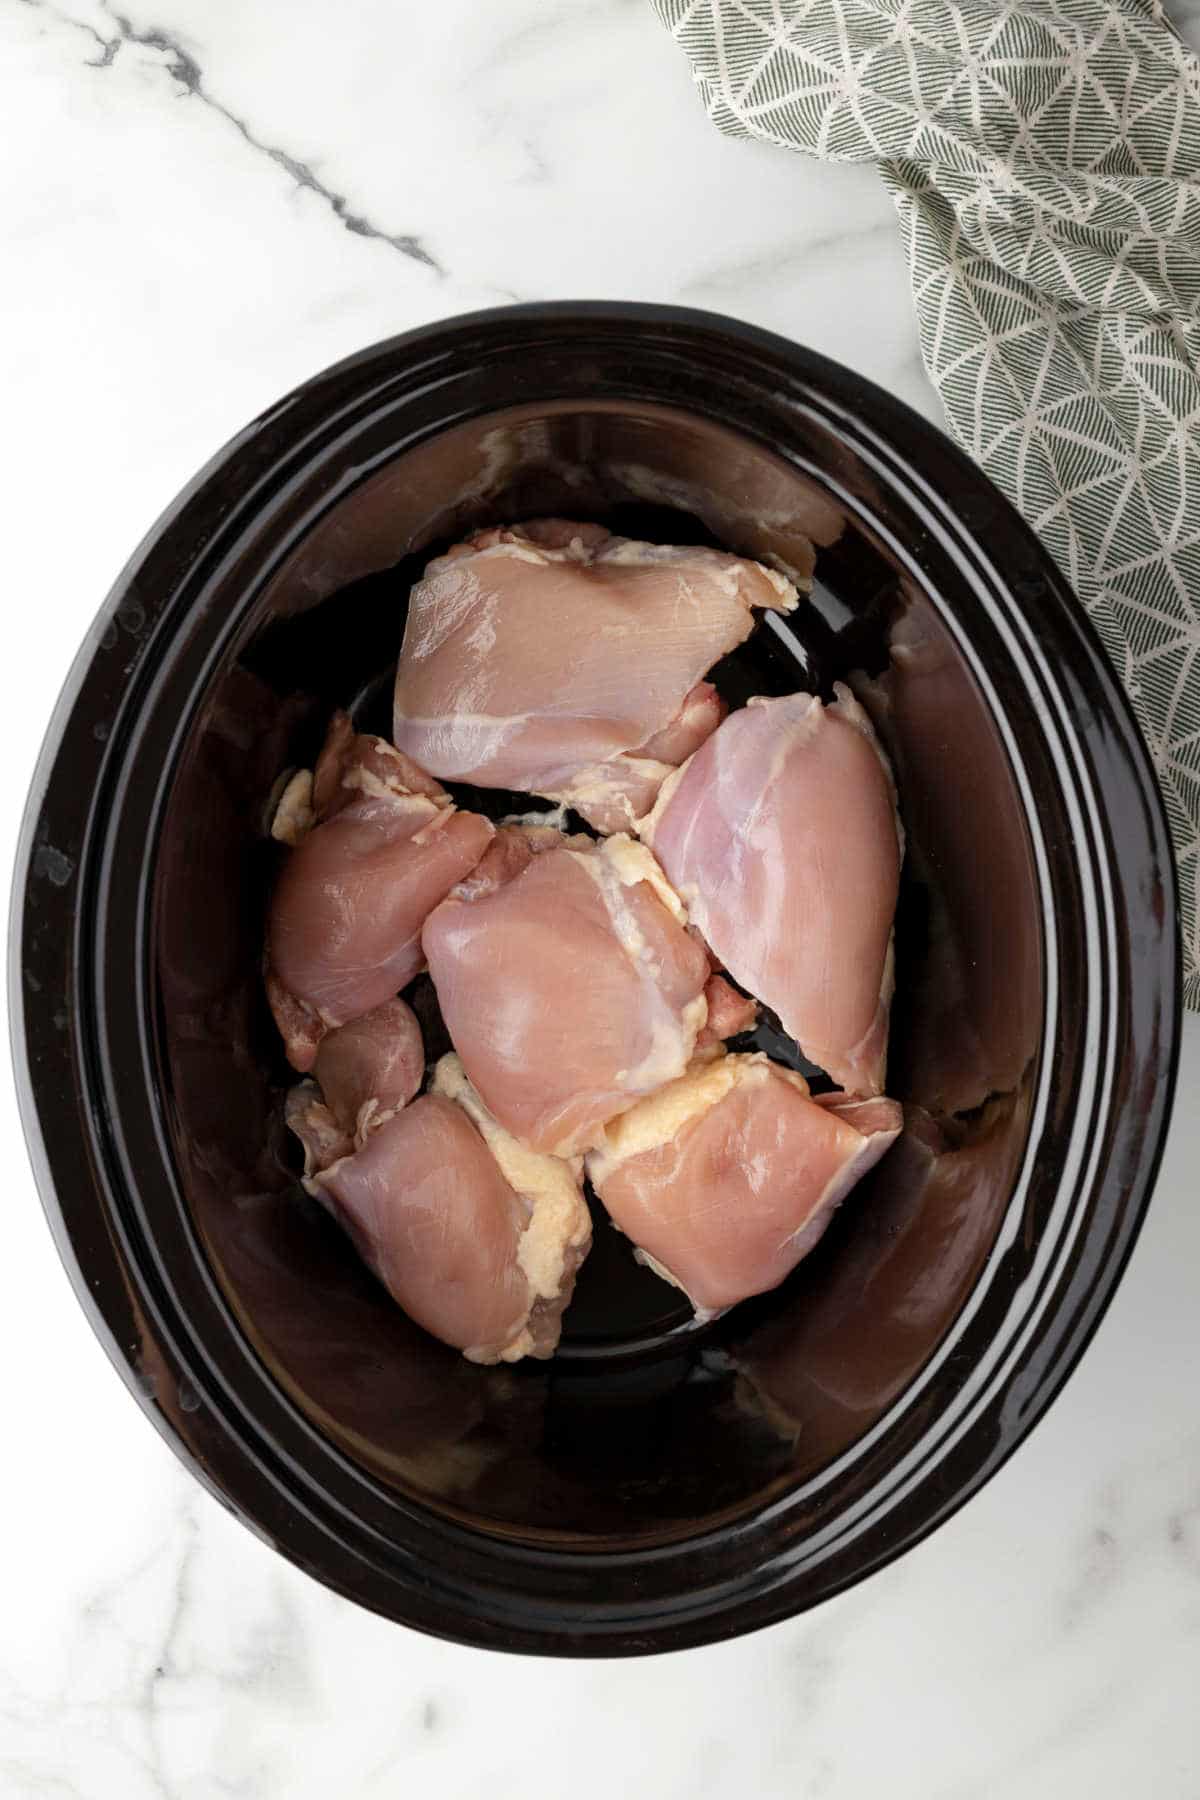 Chicken thighs in a crock pot.